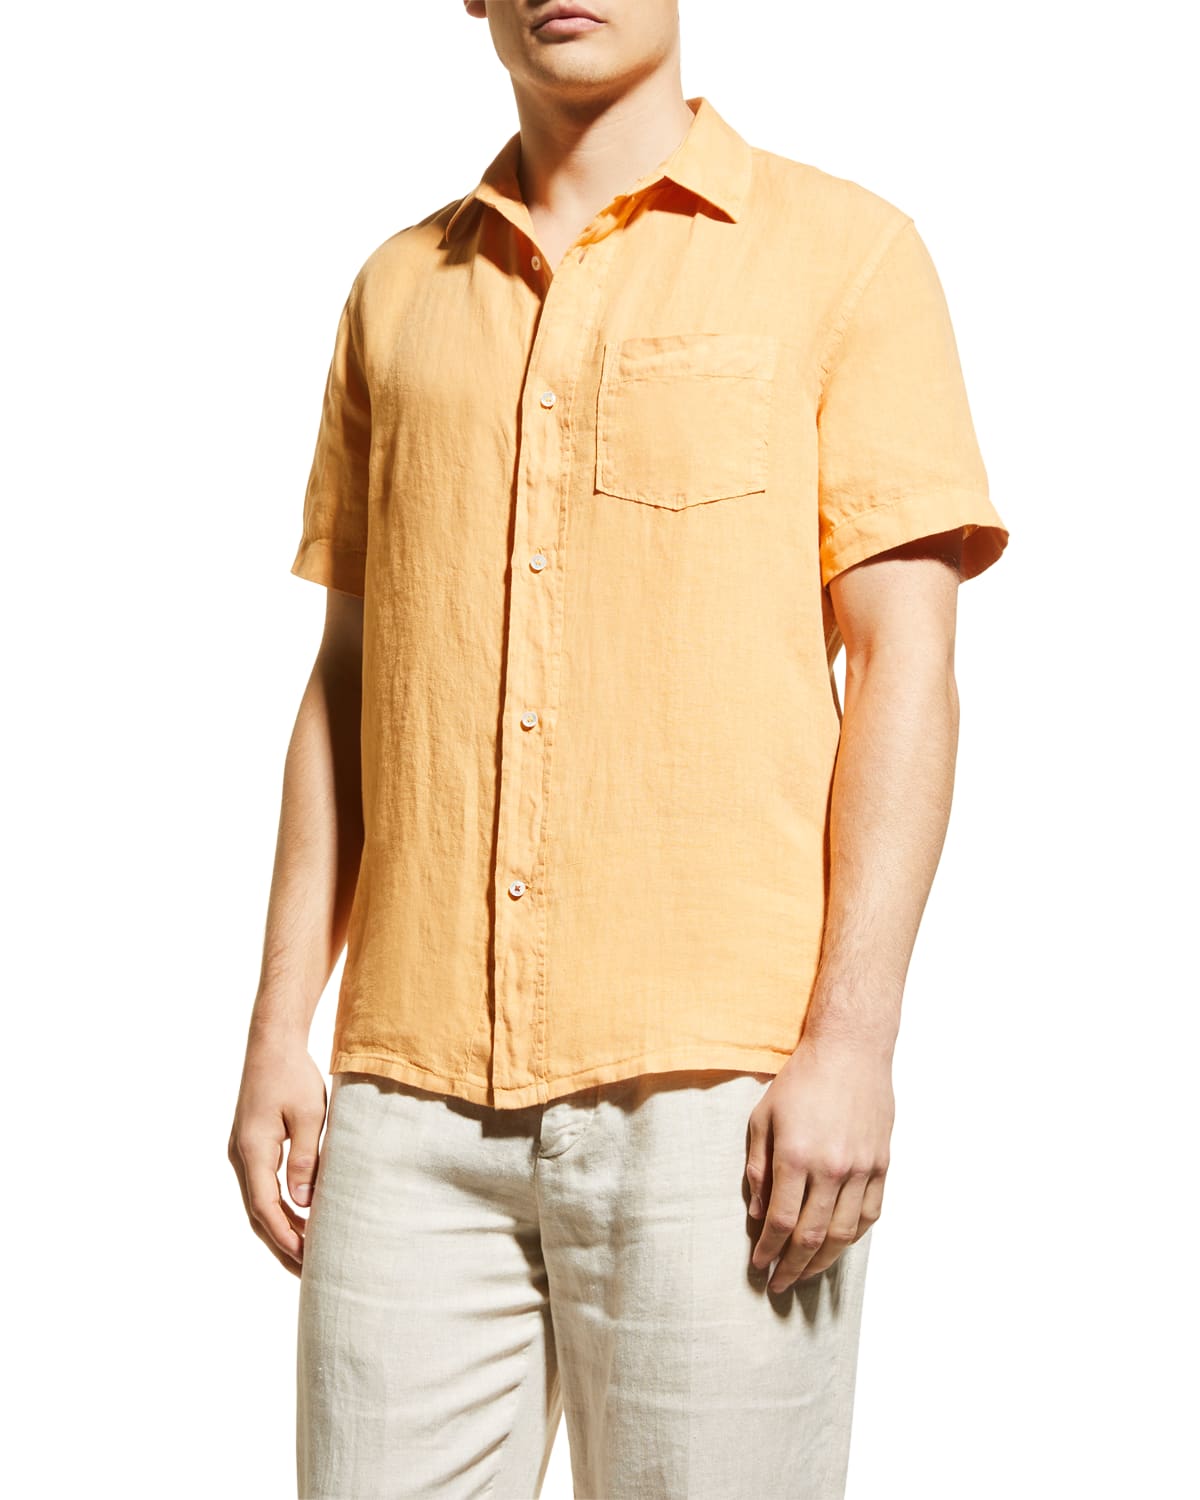 Fashion Formal Shirts Short Sleeve Shirts Loro Piana Short Sleeve Shirt white-brown allover print business style 